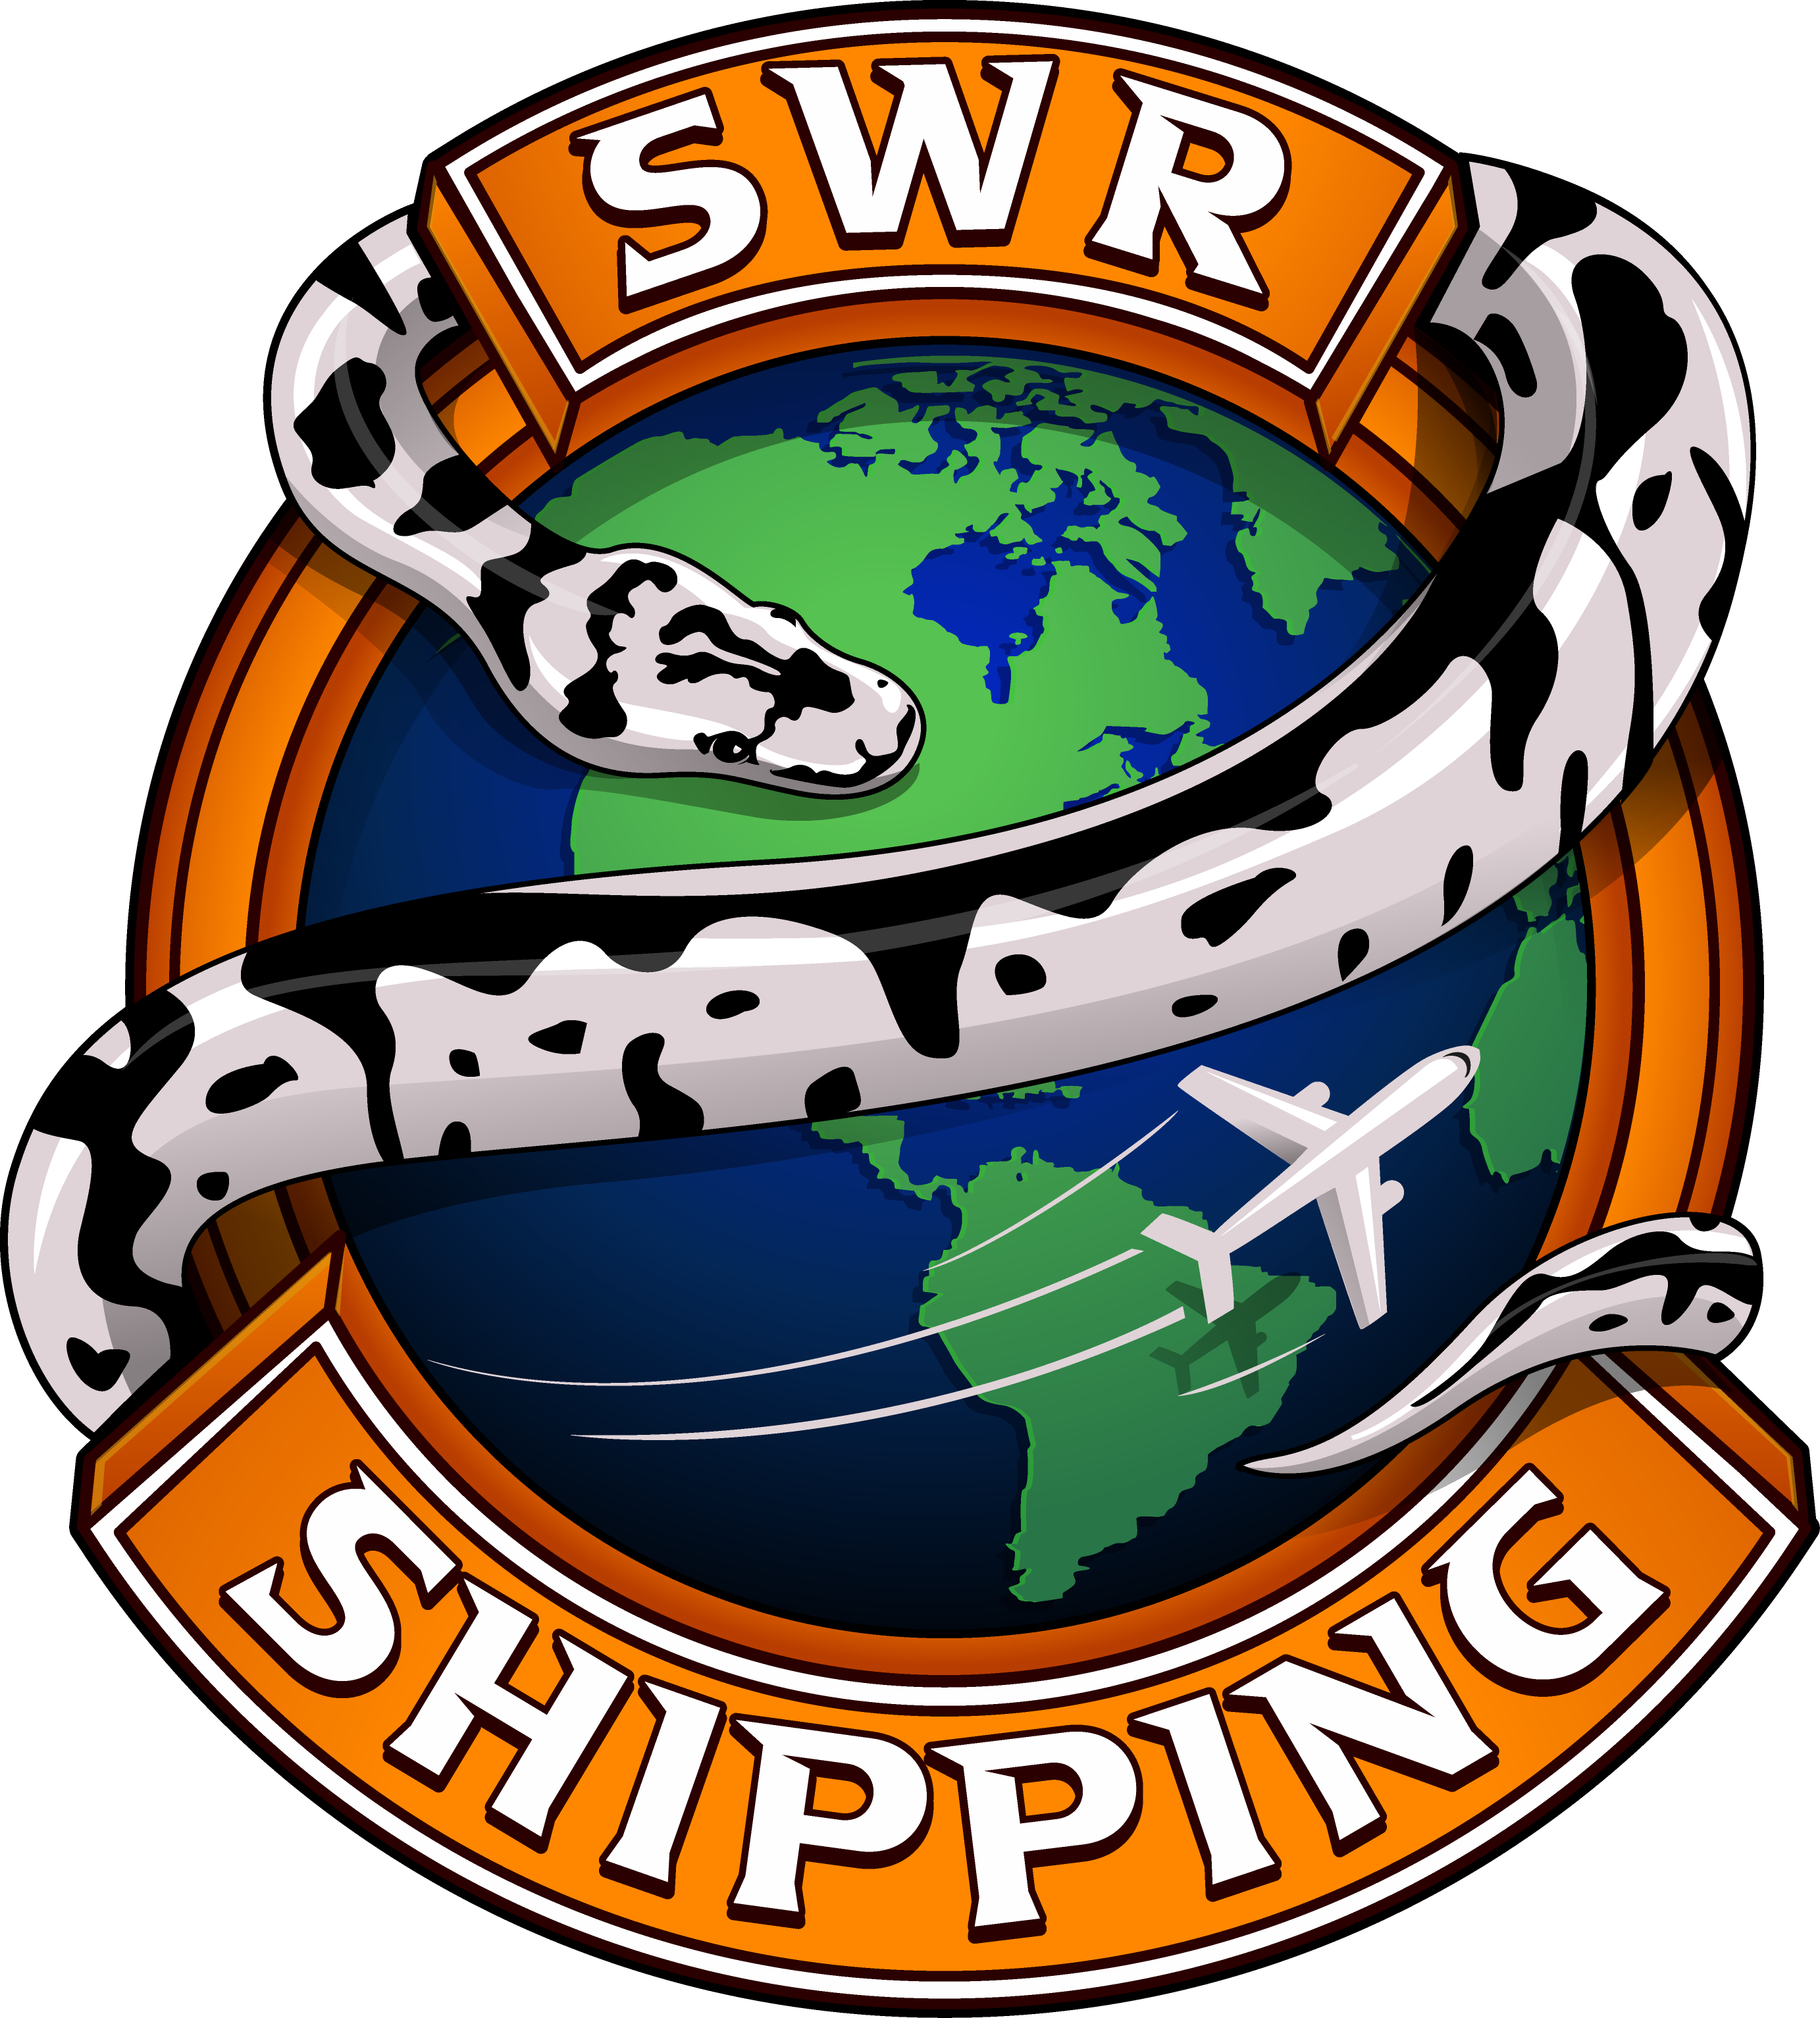 SWR Shipping